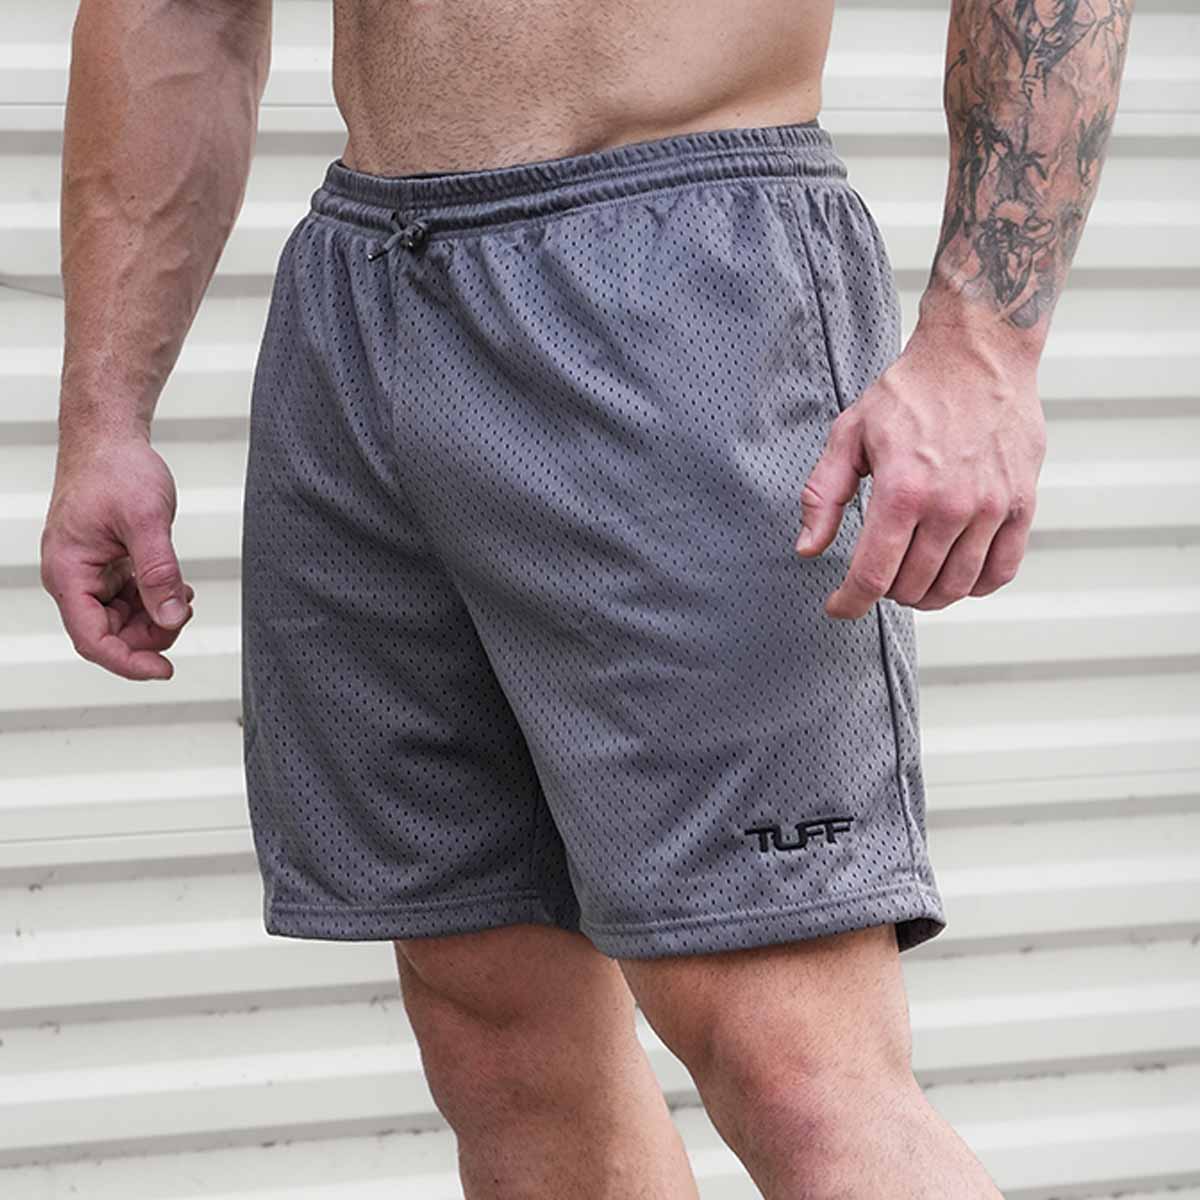 TUFF 6 Training Shorts: Men's Premium Nylon-Spandex Gym Shorts for  Performance and Comfort